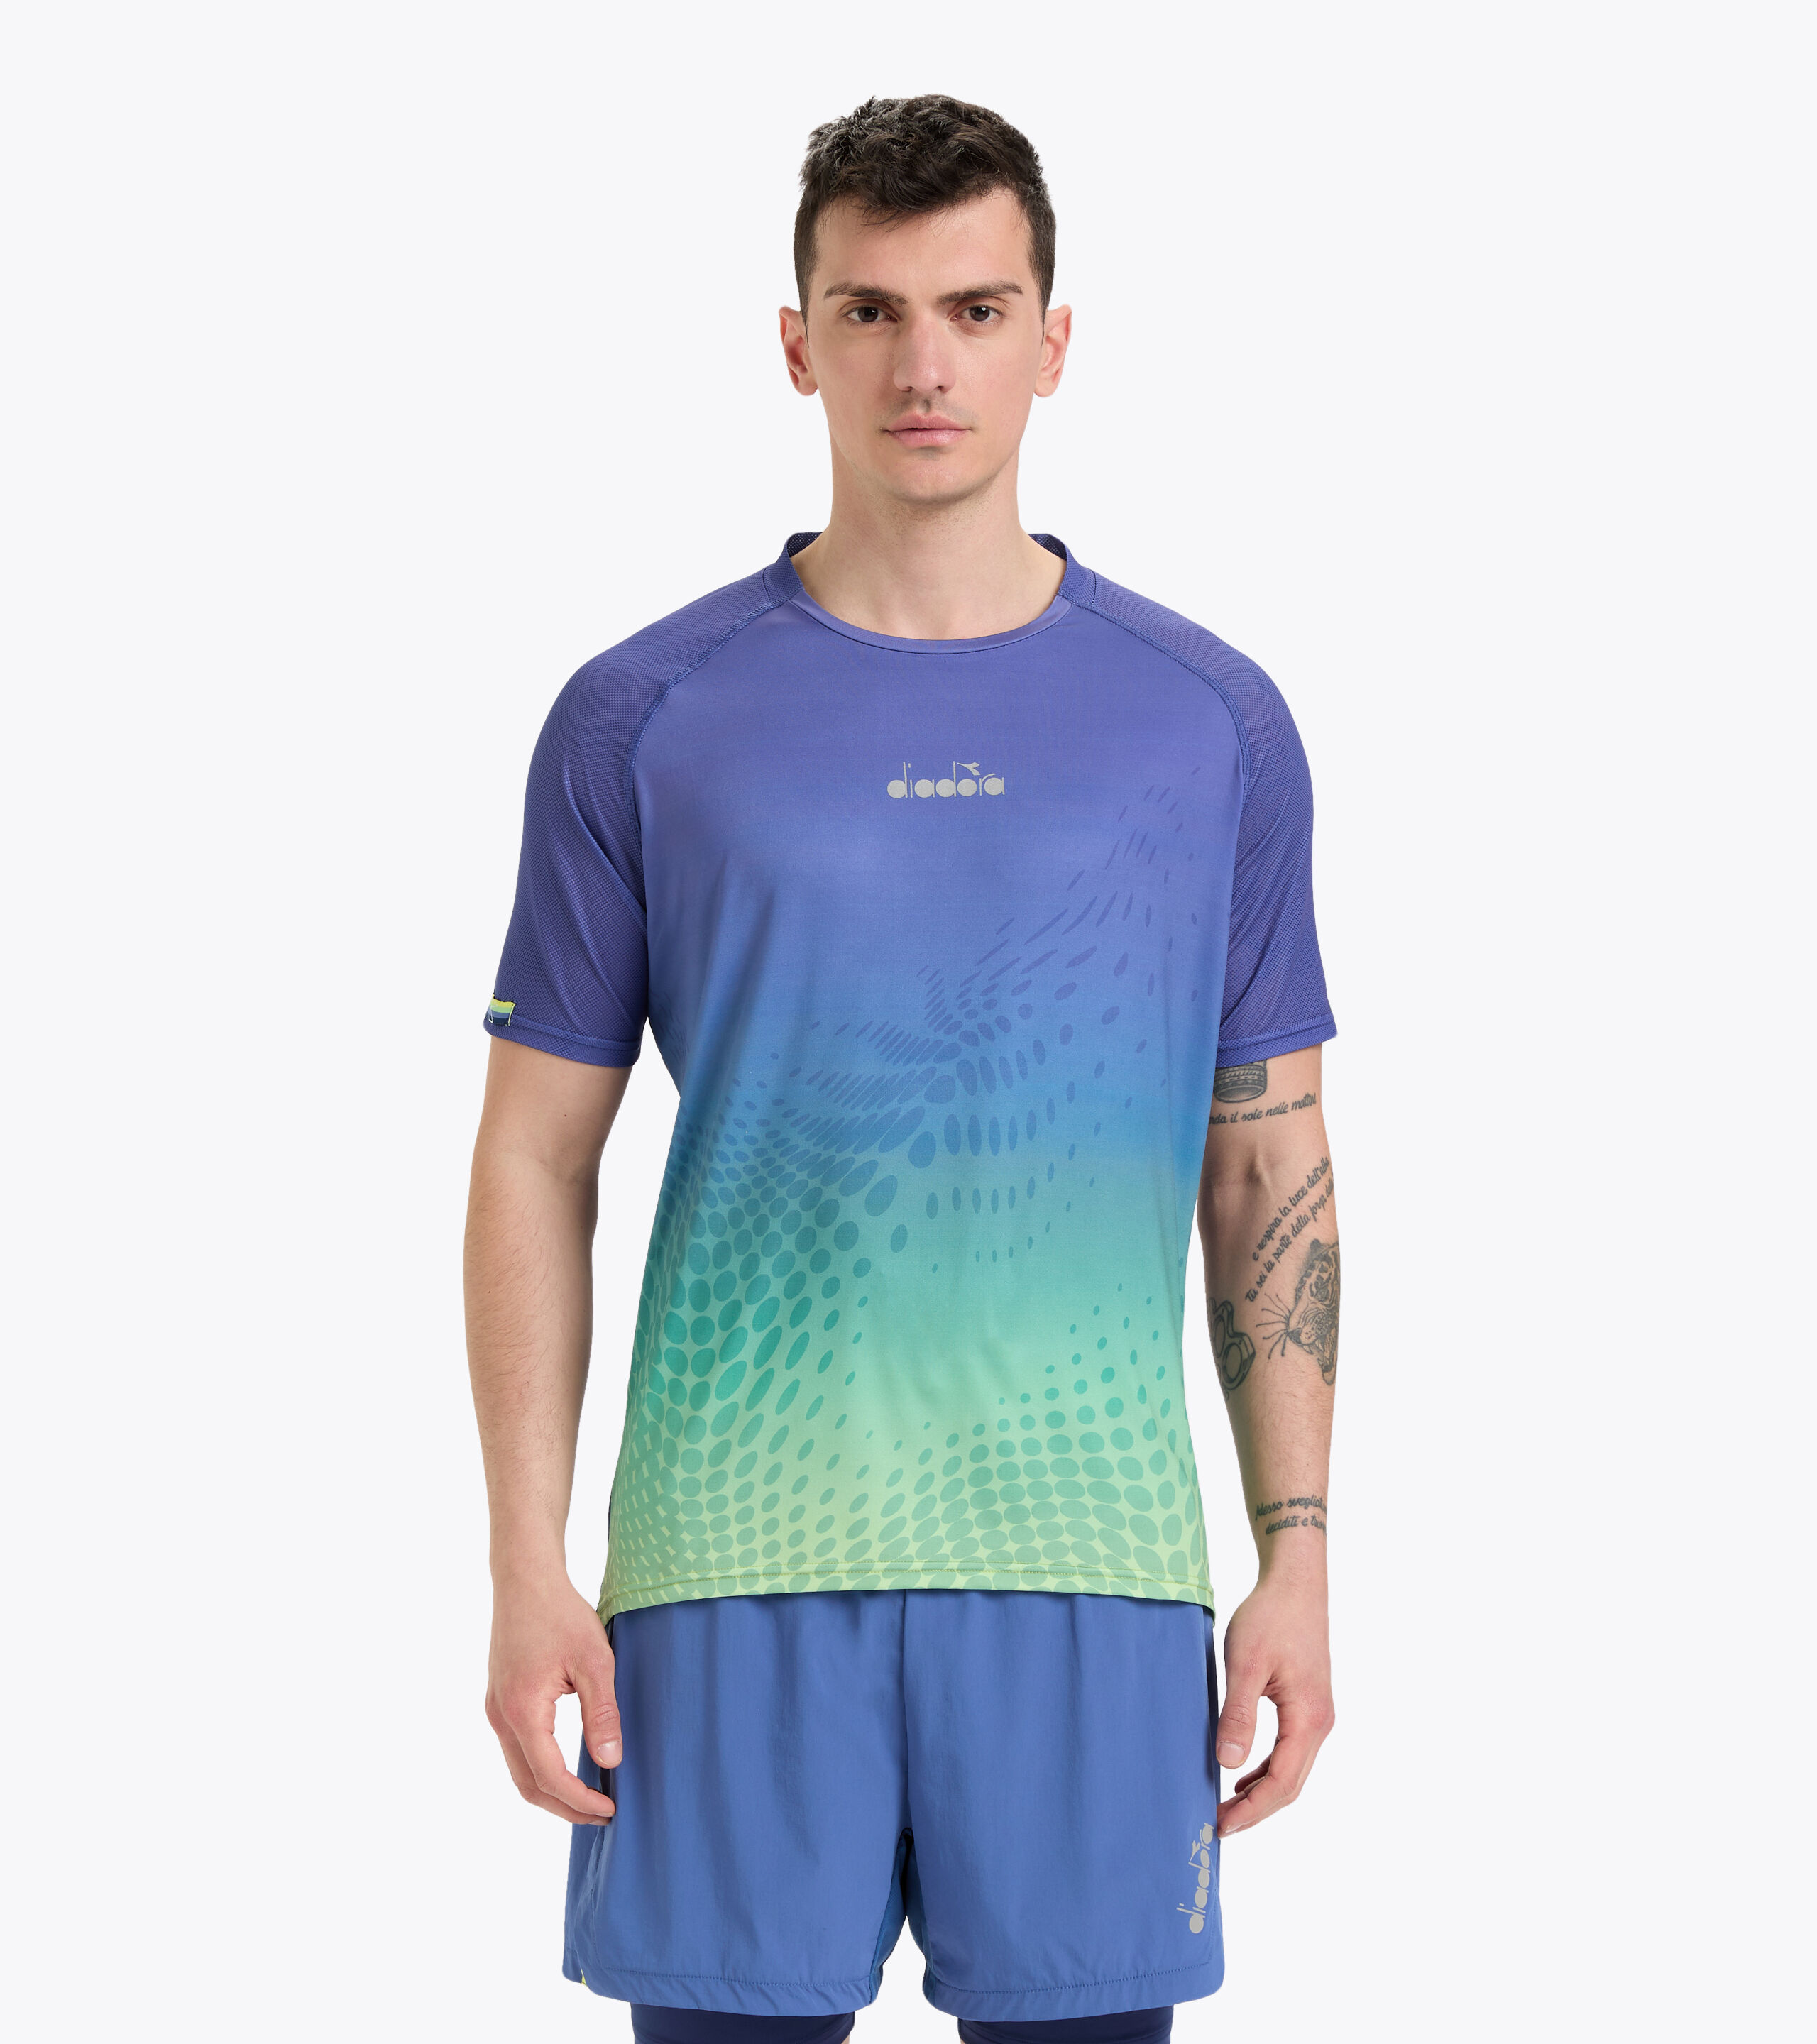 DIADORA X-Run SS T-shirt 17 Uomo Corsa Maglietta Fitness Allenamento Shirt 102.171316 